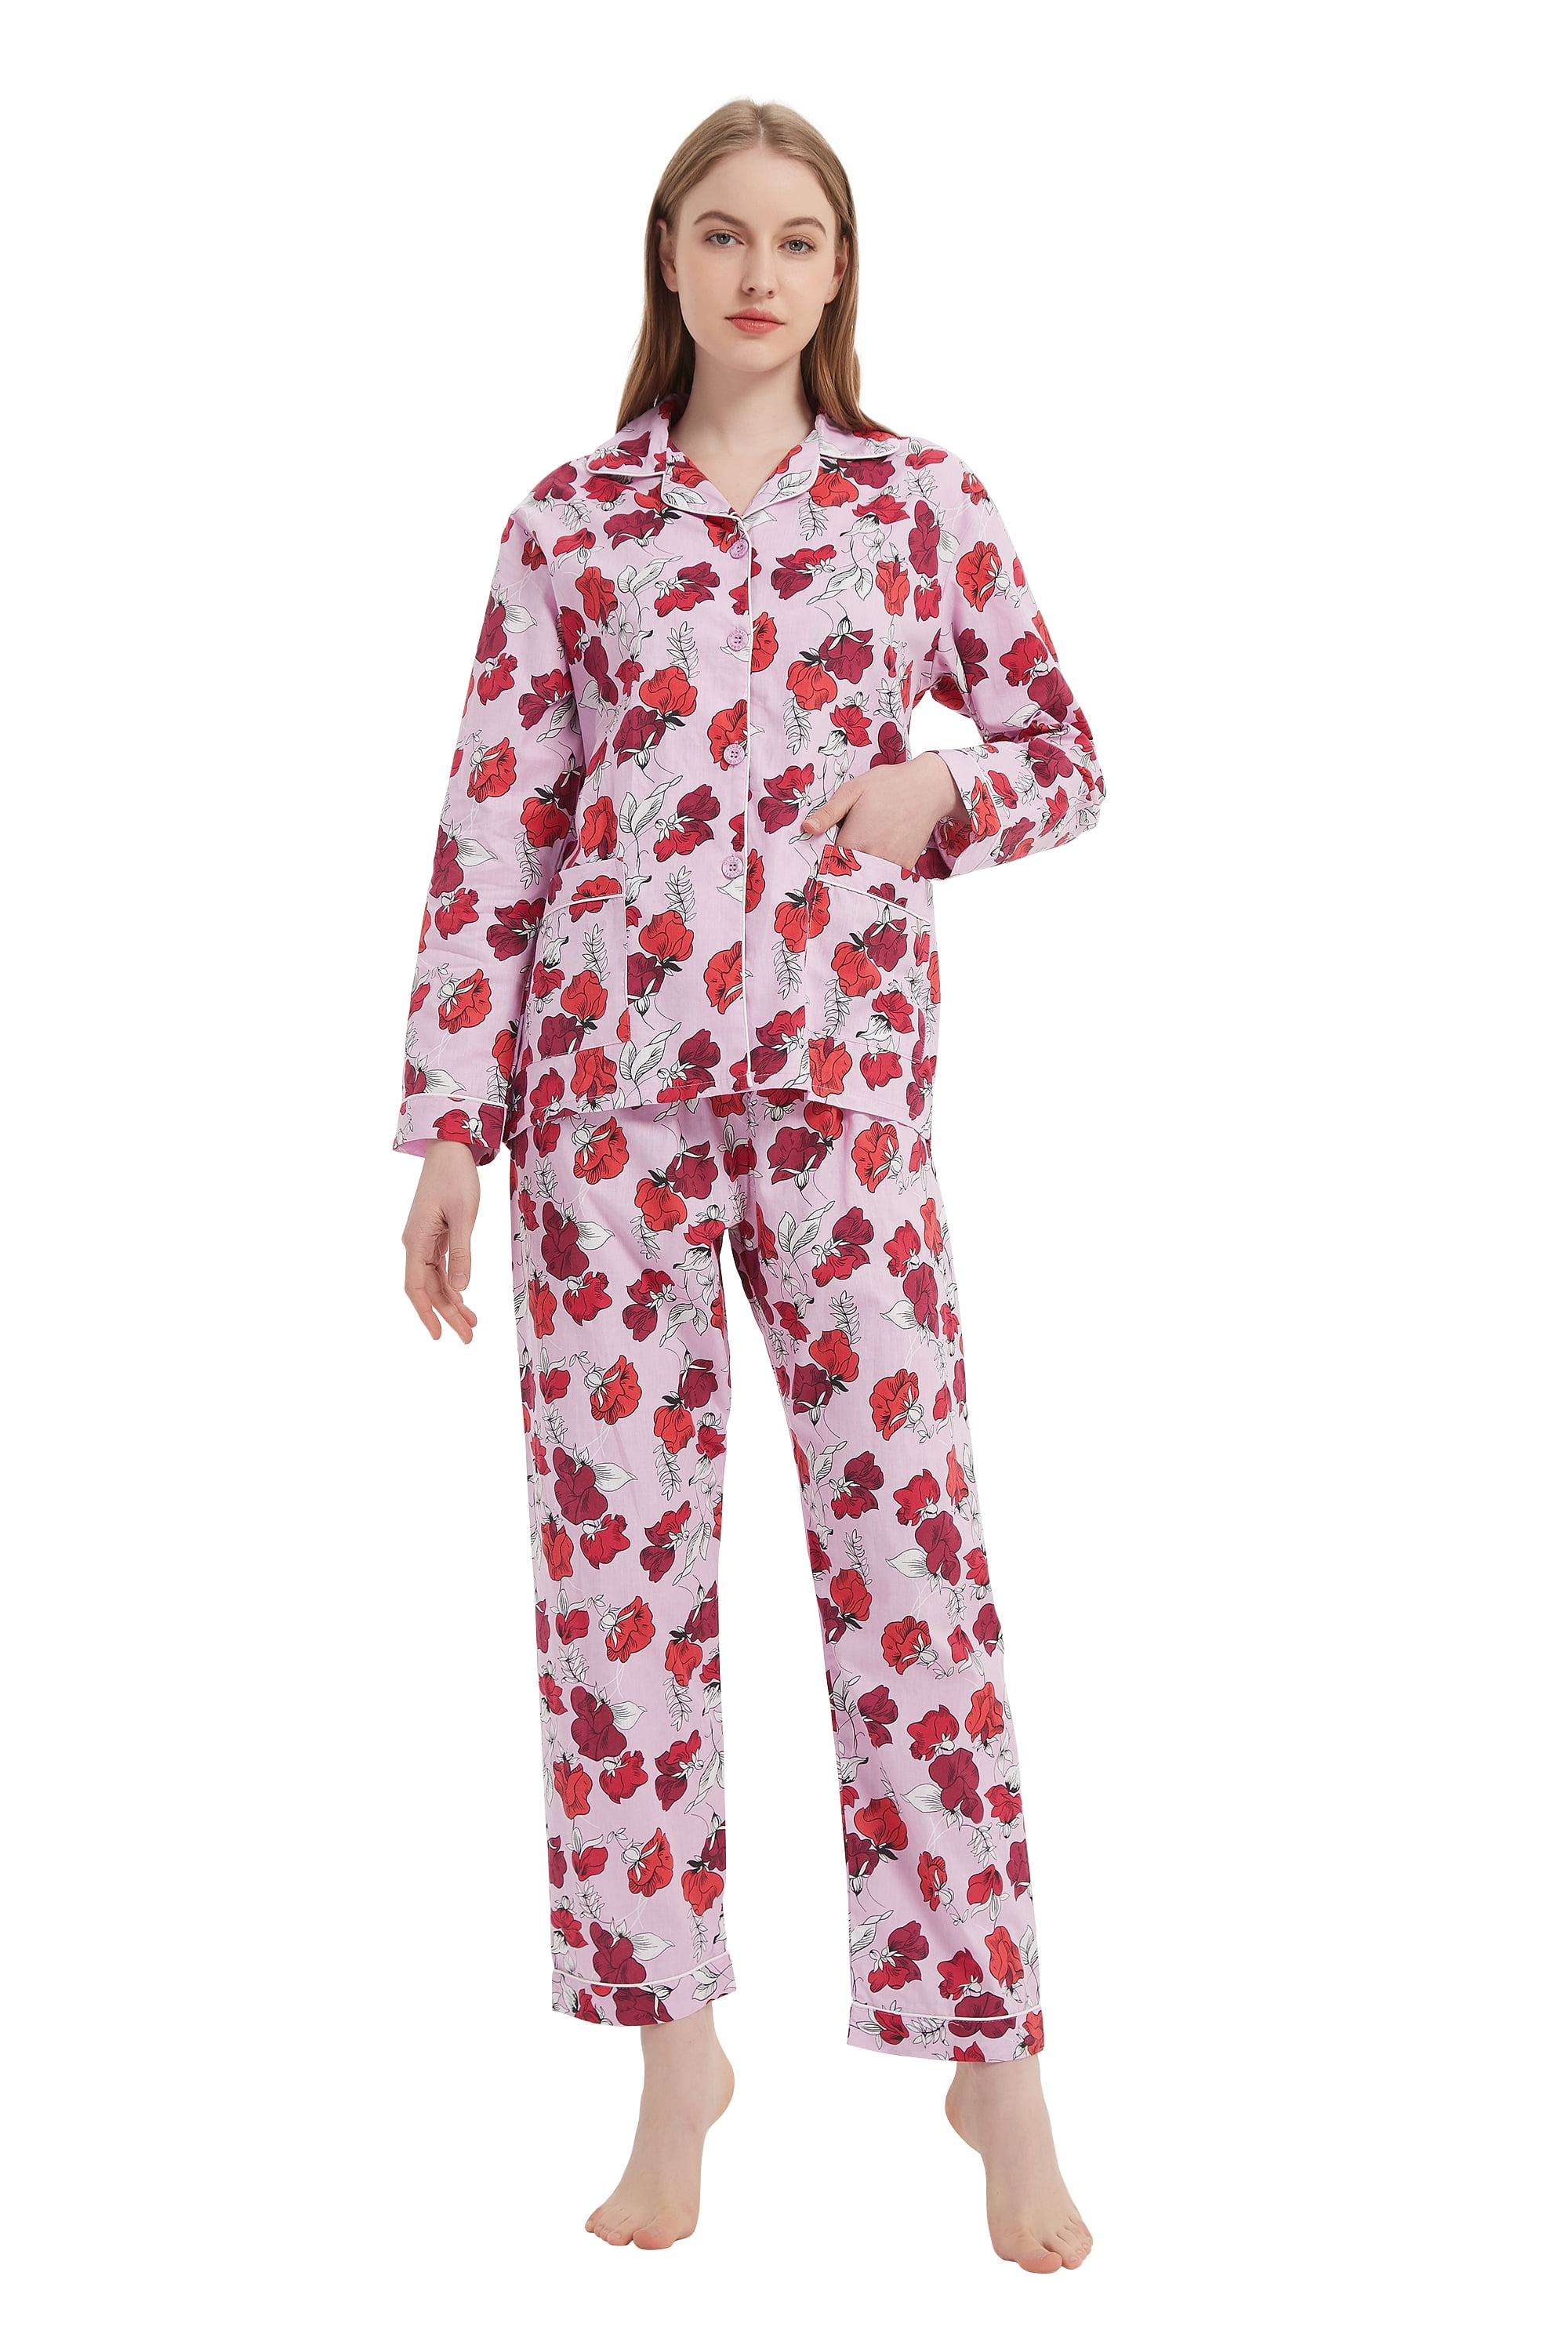 GLOBAL Womens Pajamas Set 100% Cotton Womens PJs Drawstring Sleepwear ...